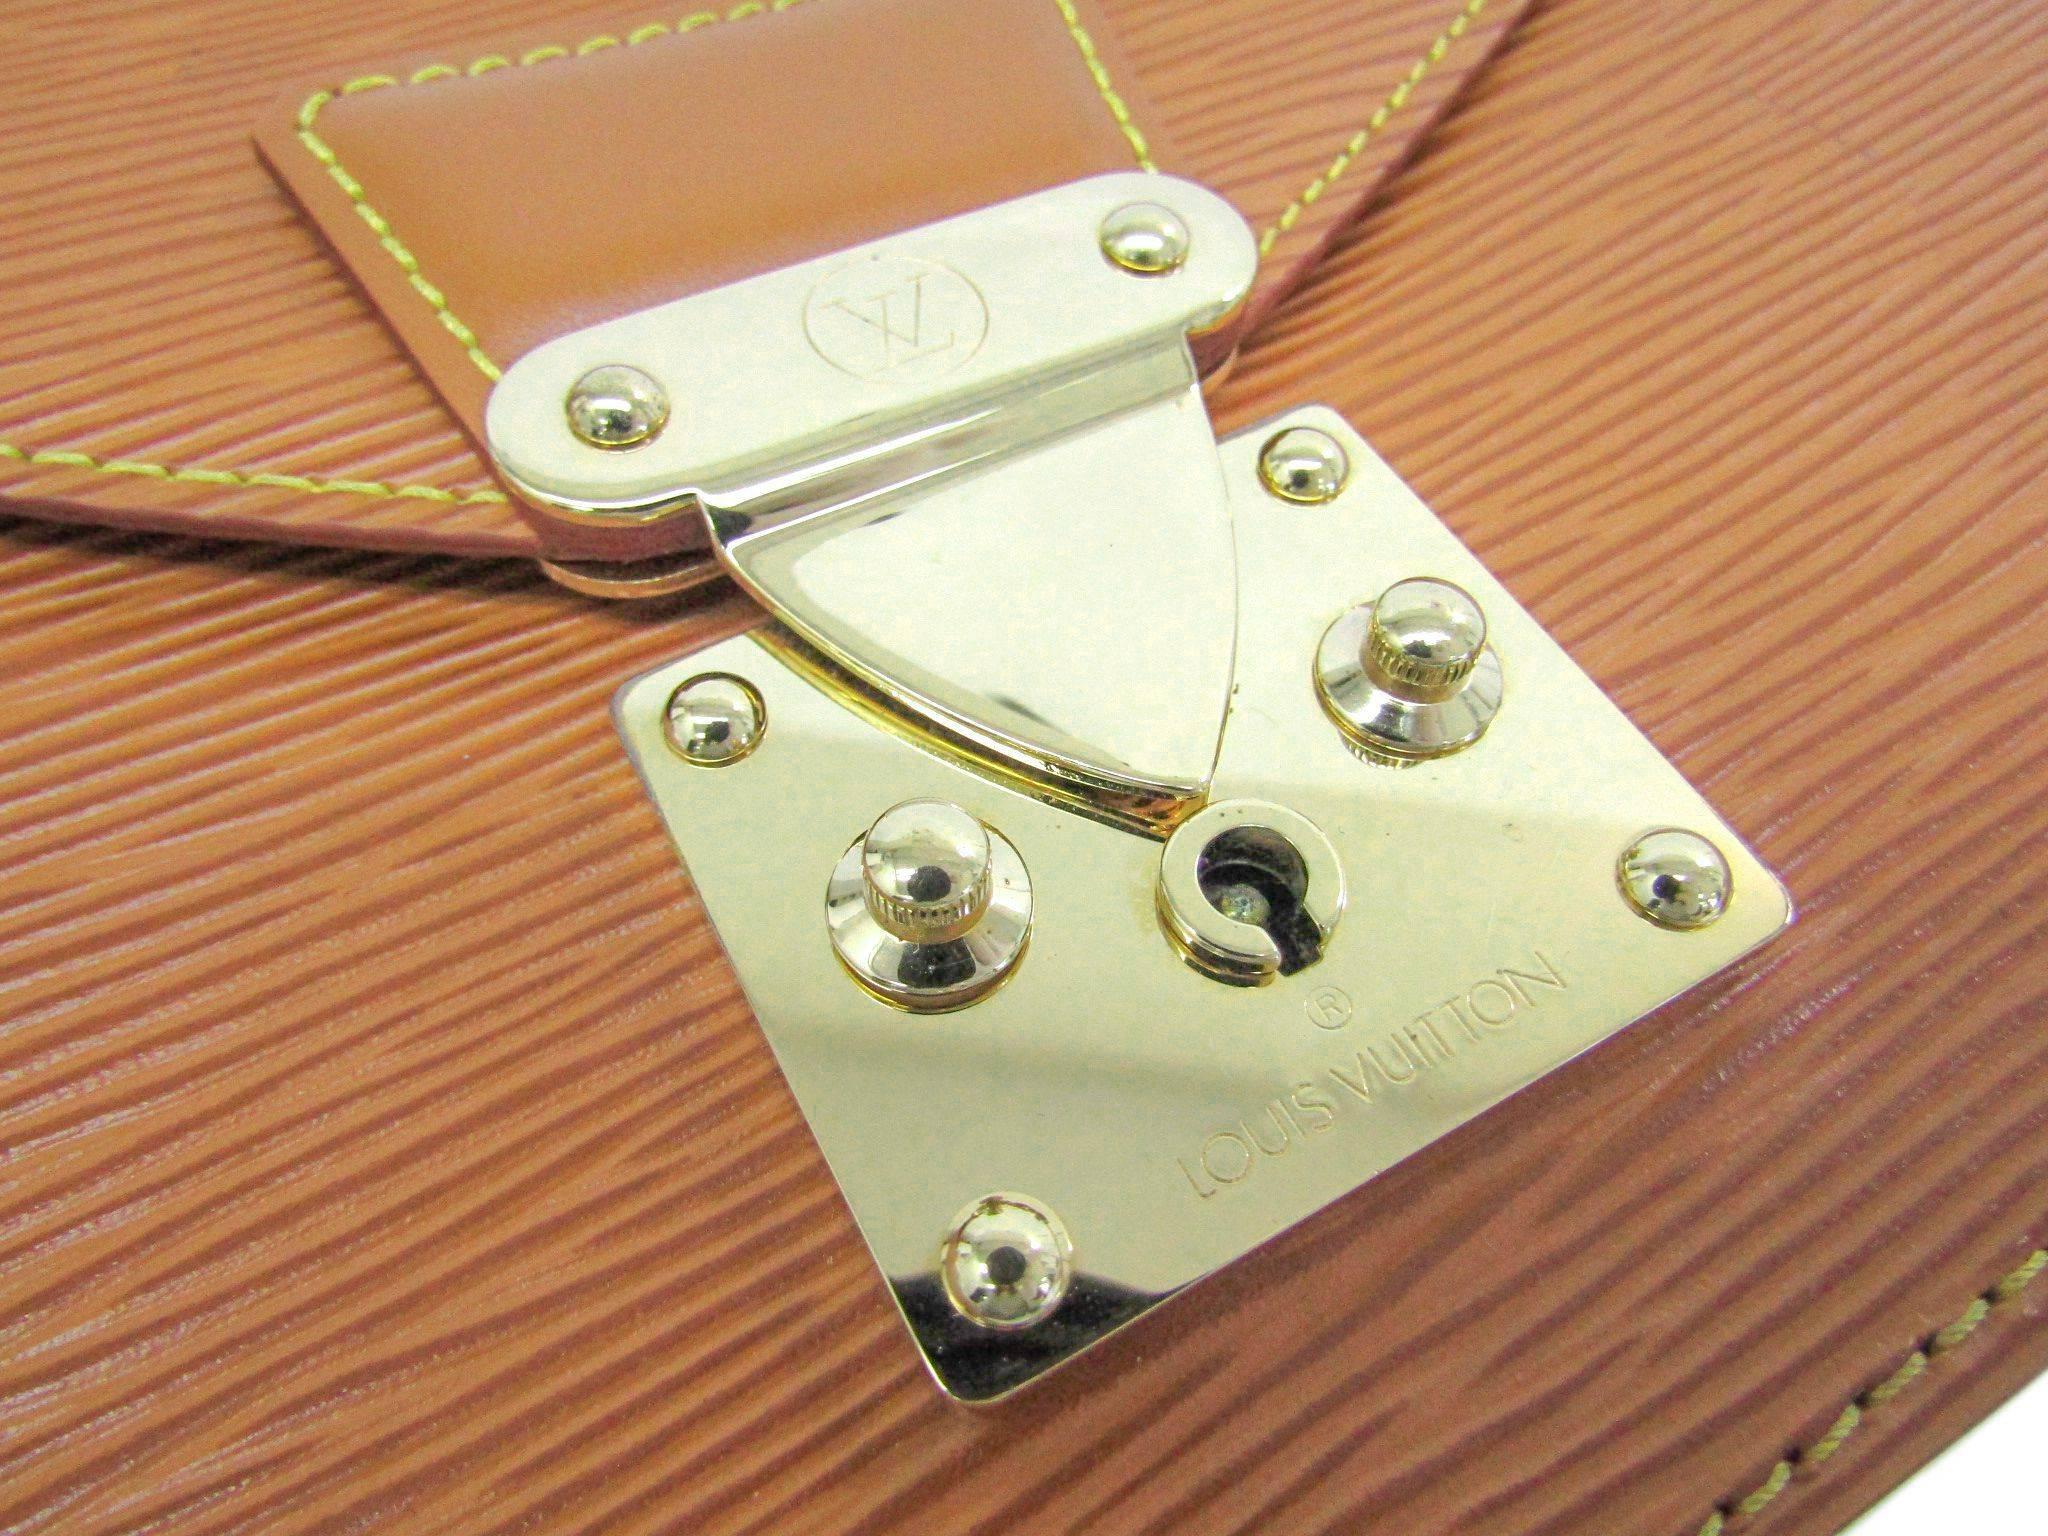 Louis Vuitton Cognac Epi Gold Envelope Wristlet Evening Flap Clutch Bag 
Leather
Gold tone hardware
Push lock closure
Made in France
Slide lock closure
Date code VI0011
Strap drop 16.5